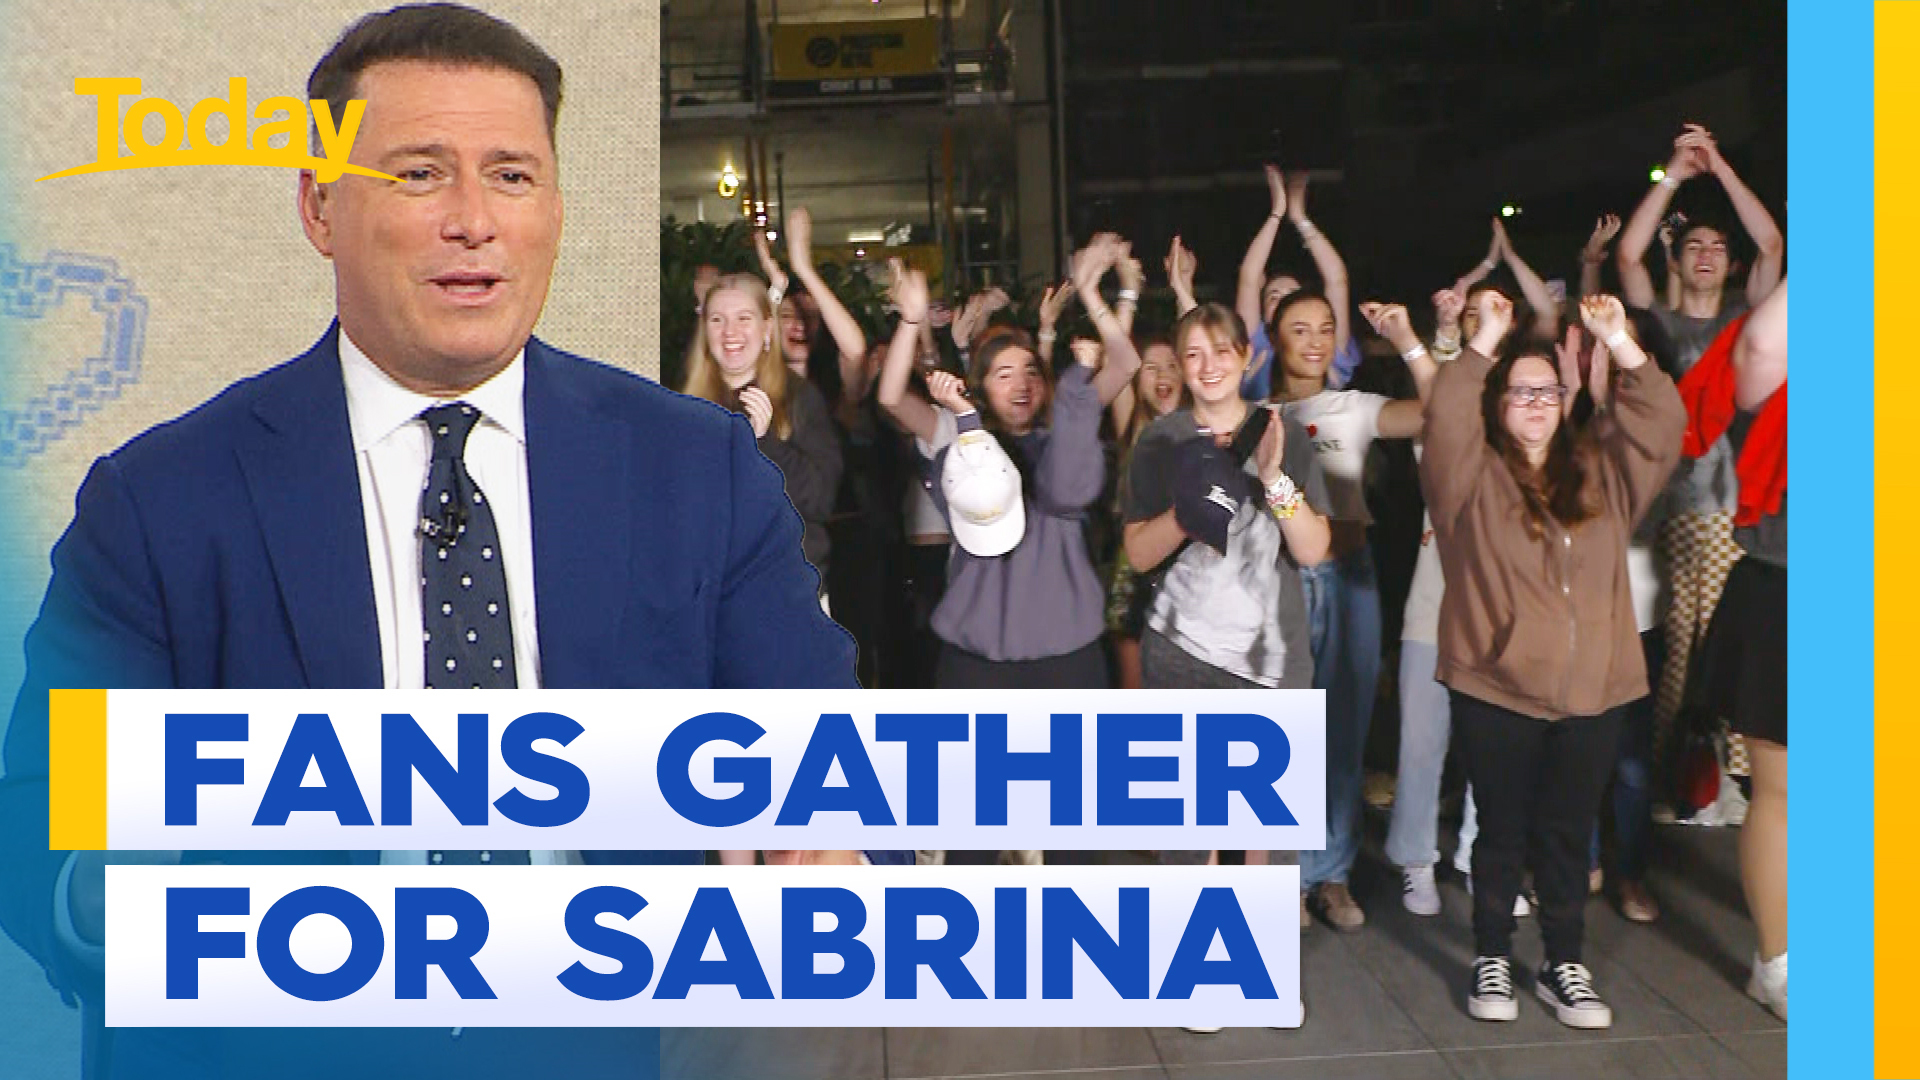 Large crowds gather to see Sabrina Carpenter